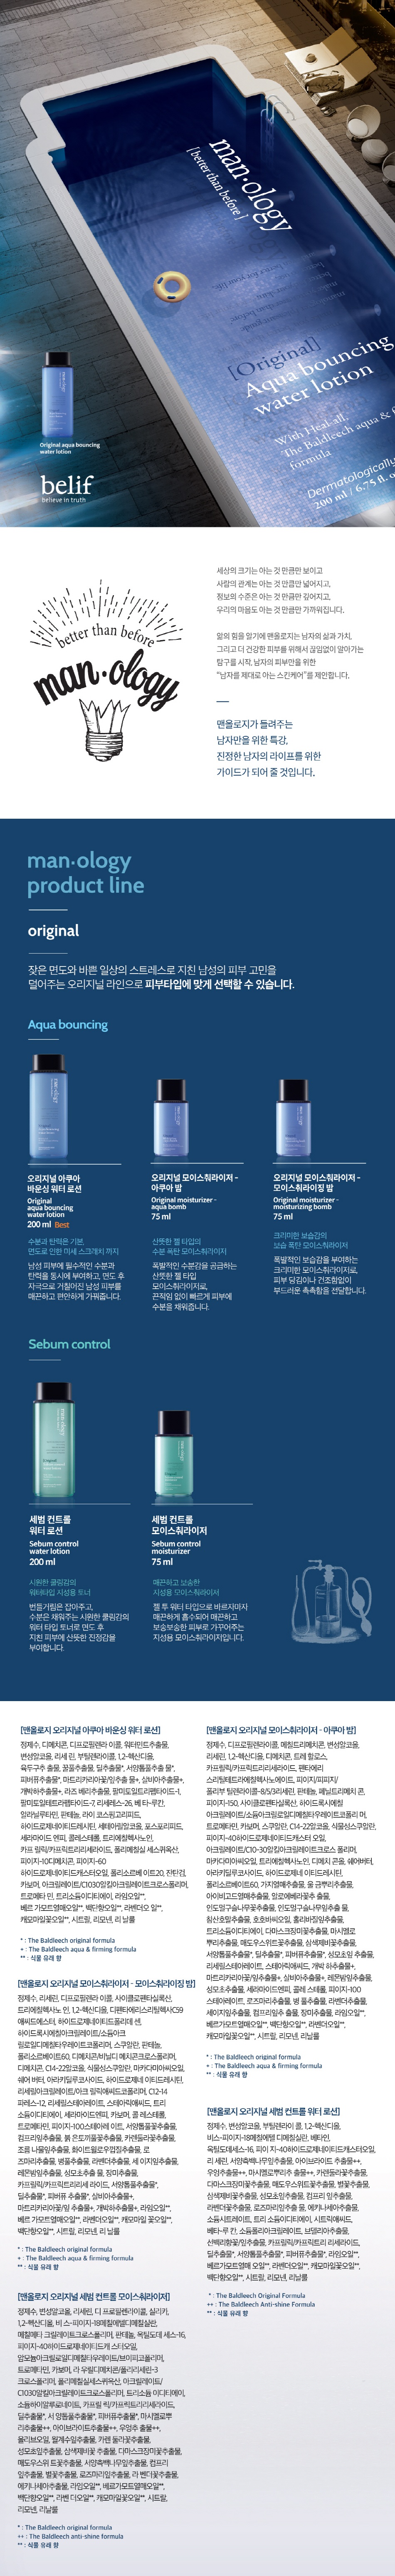 Belif Manology Original Moisturizer Aqua Bomb korean men skincare product online sho malaysia China india